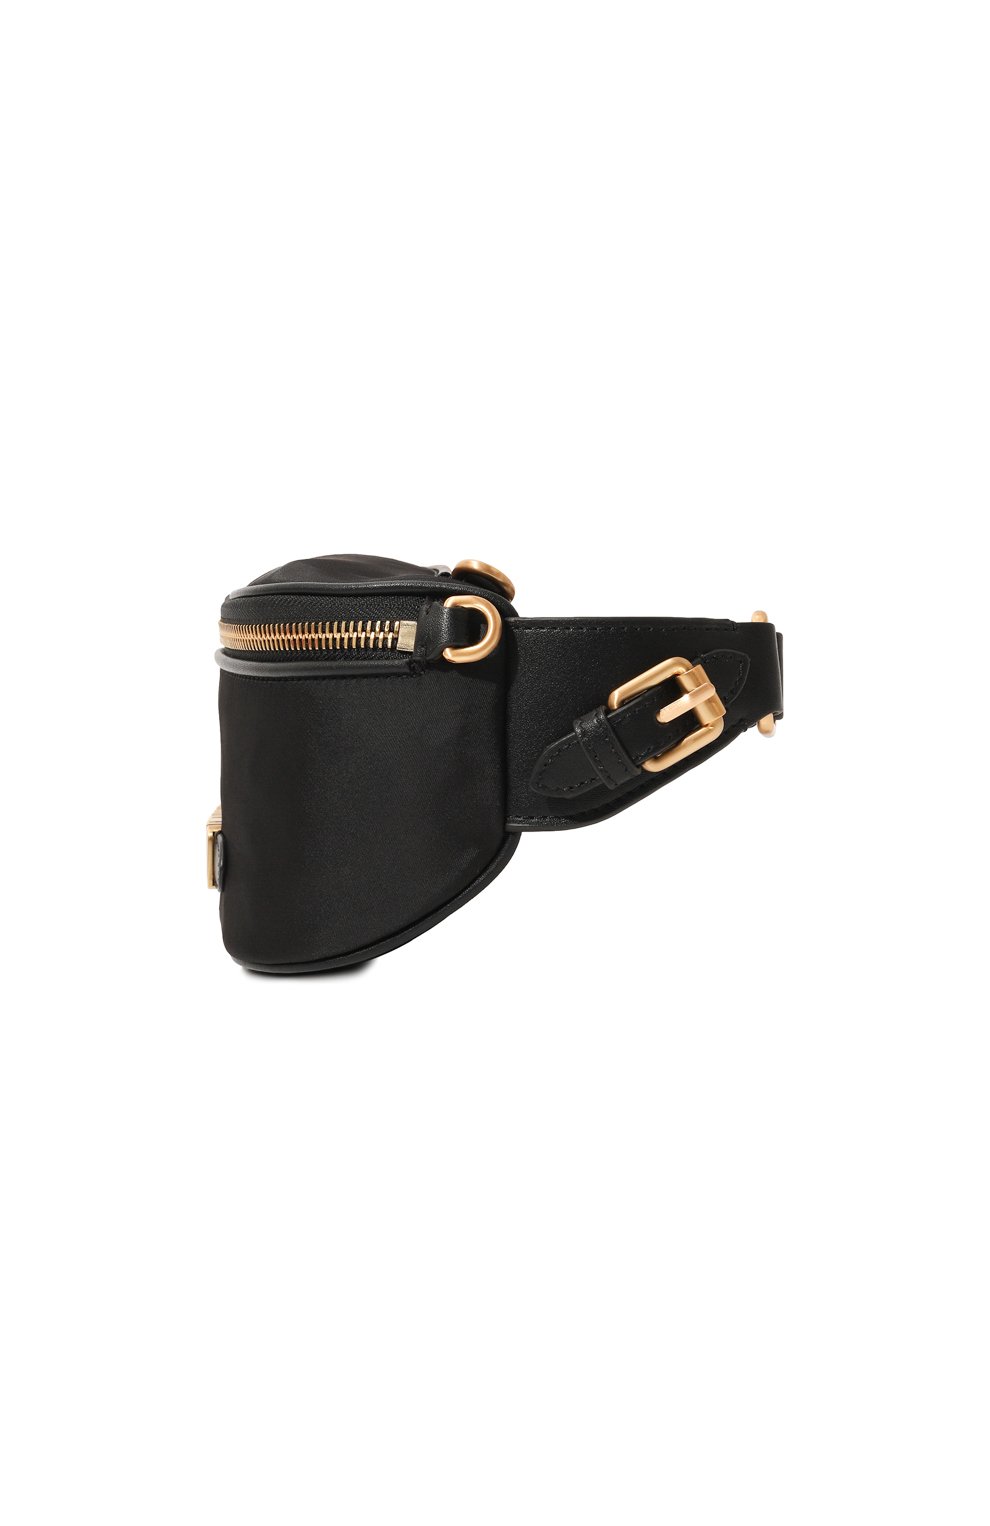 Поясная сумка Belt Moschino 2317 B7707/8202, цвет чёрный, размер NS 2317 B7707/8202 - фото 4